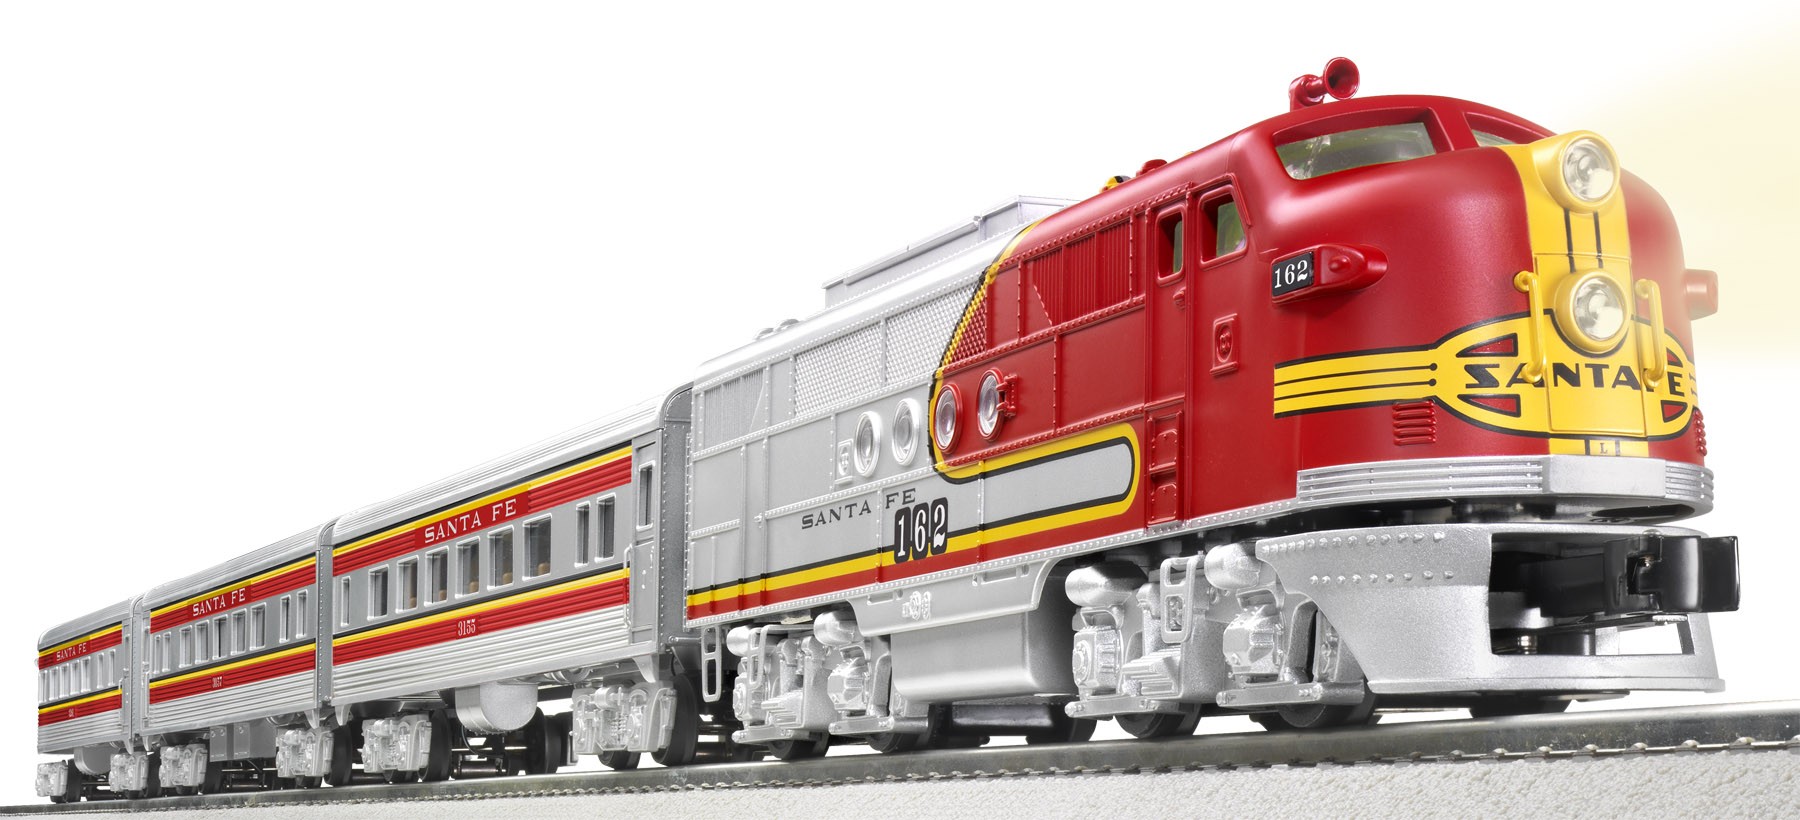 Win a Lionel Trains Santa Fe Super Chief Set Valued at $439.99 (Ends 